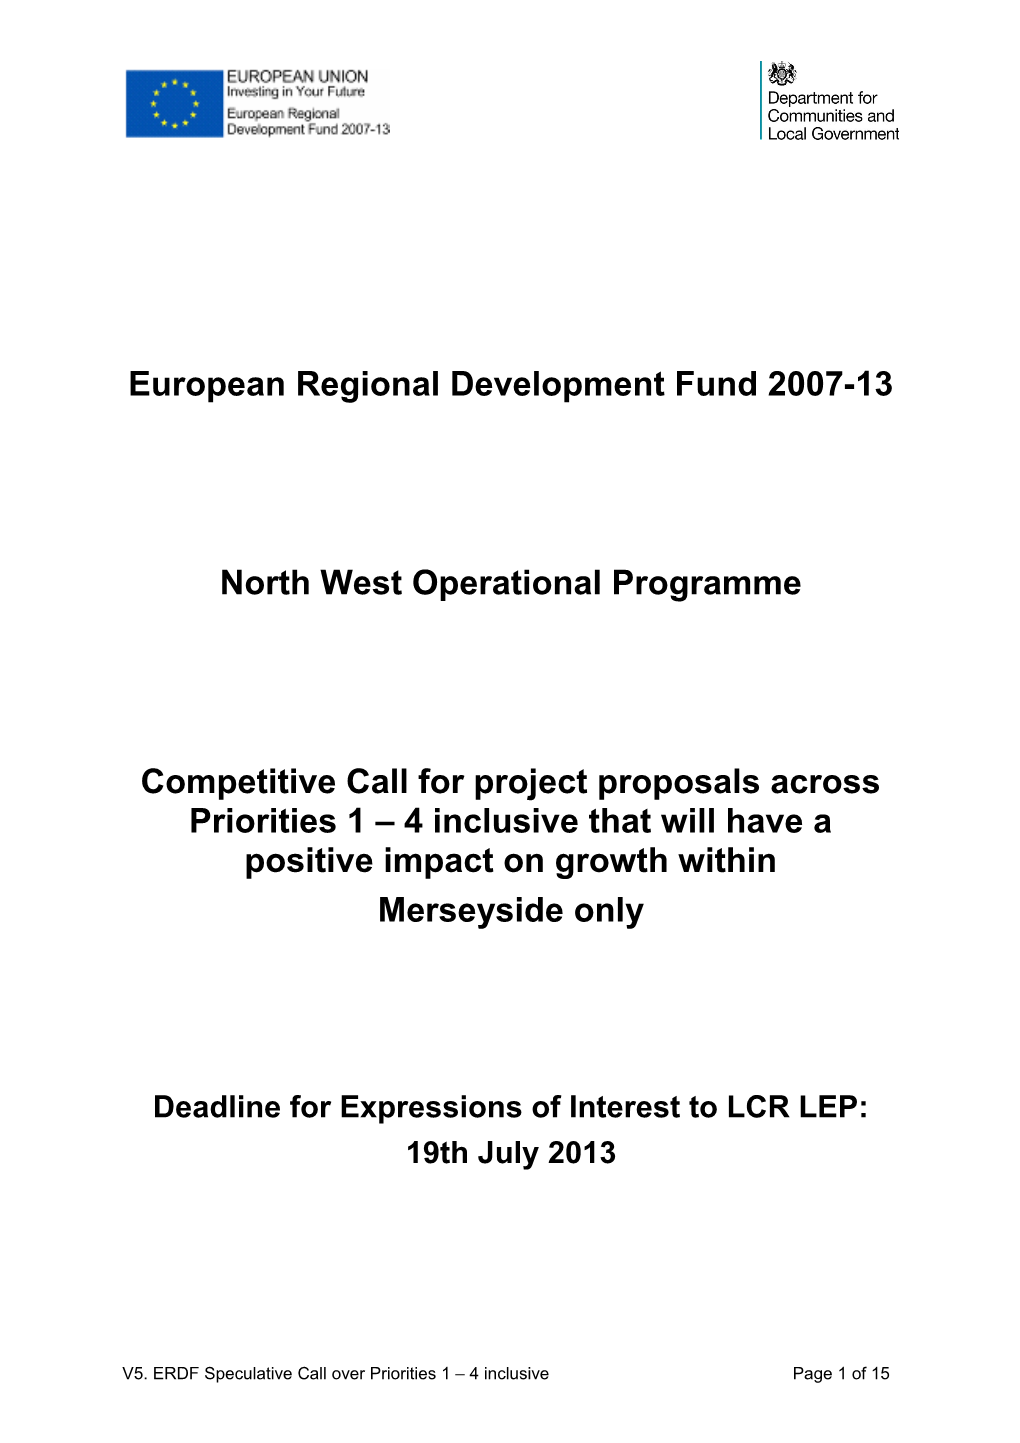 ERDF Project Call P1-4 Mside July 2013